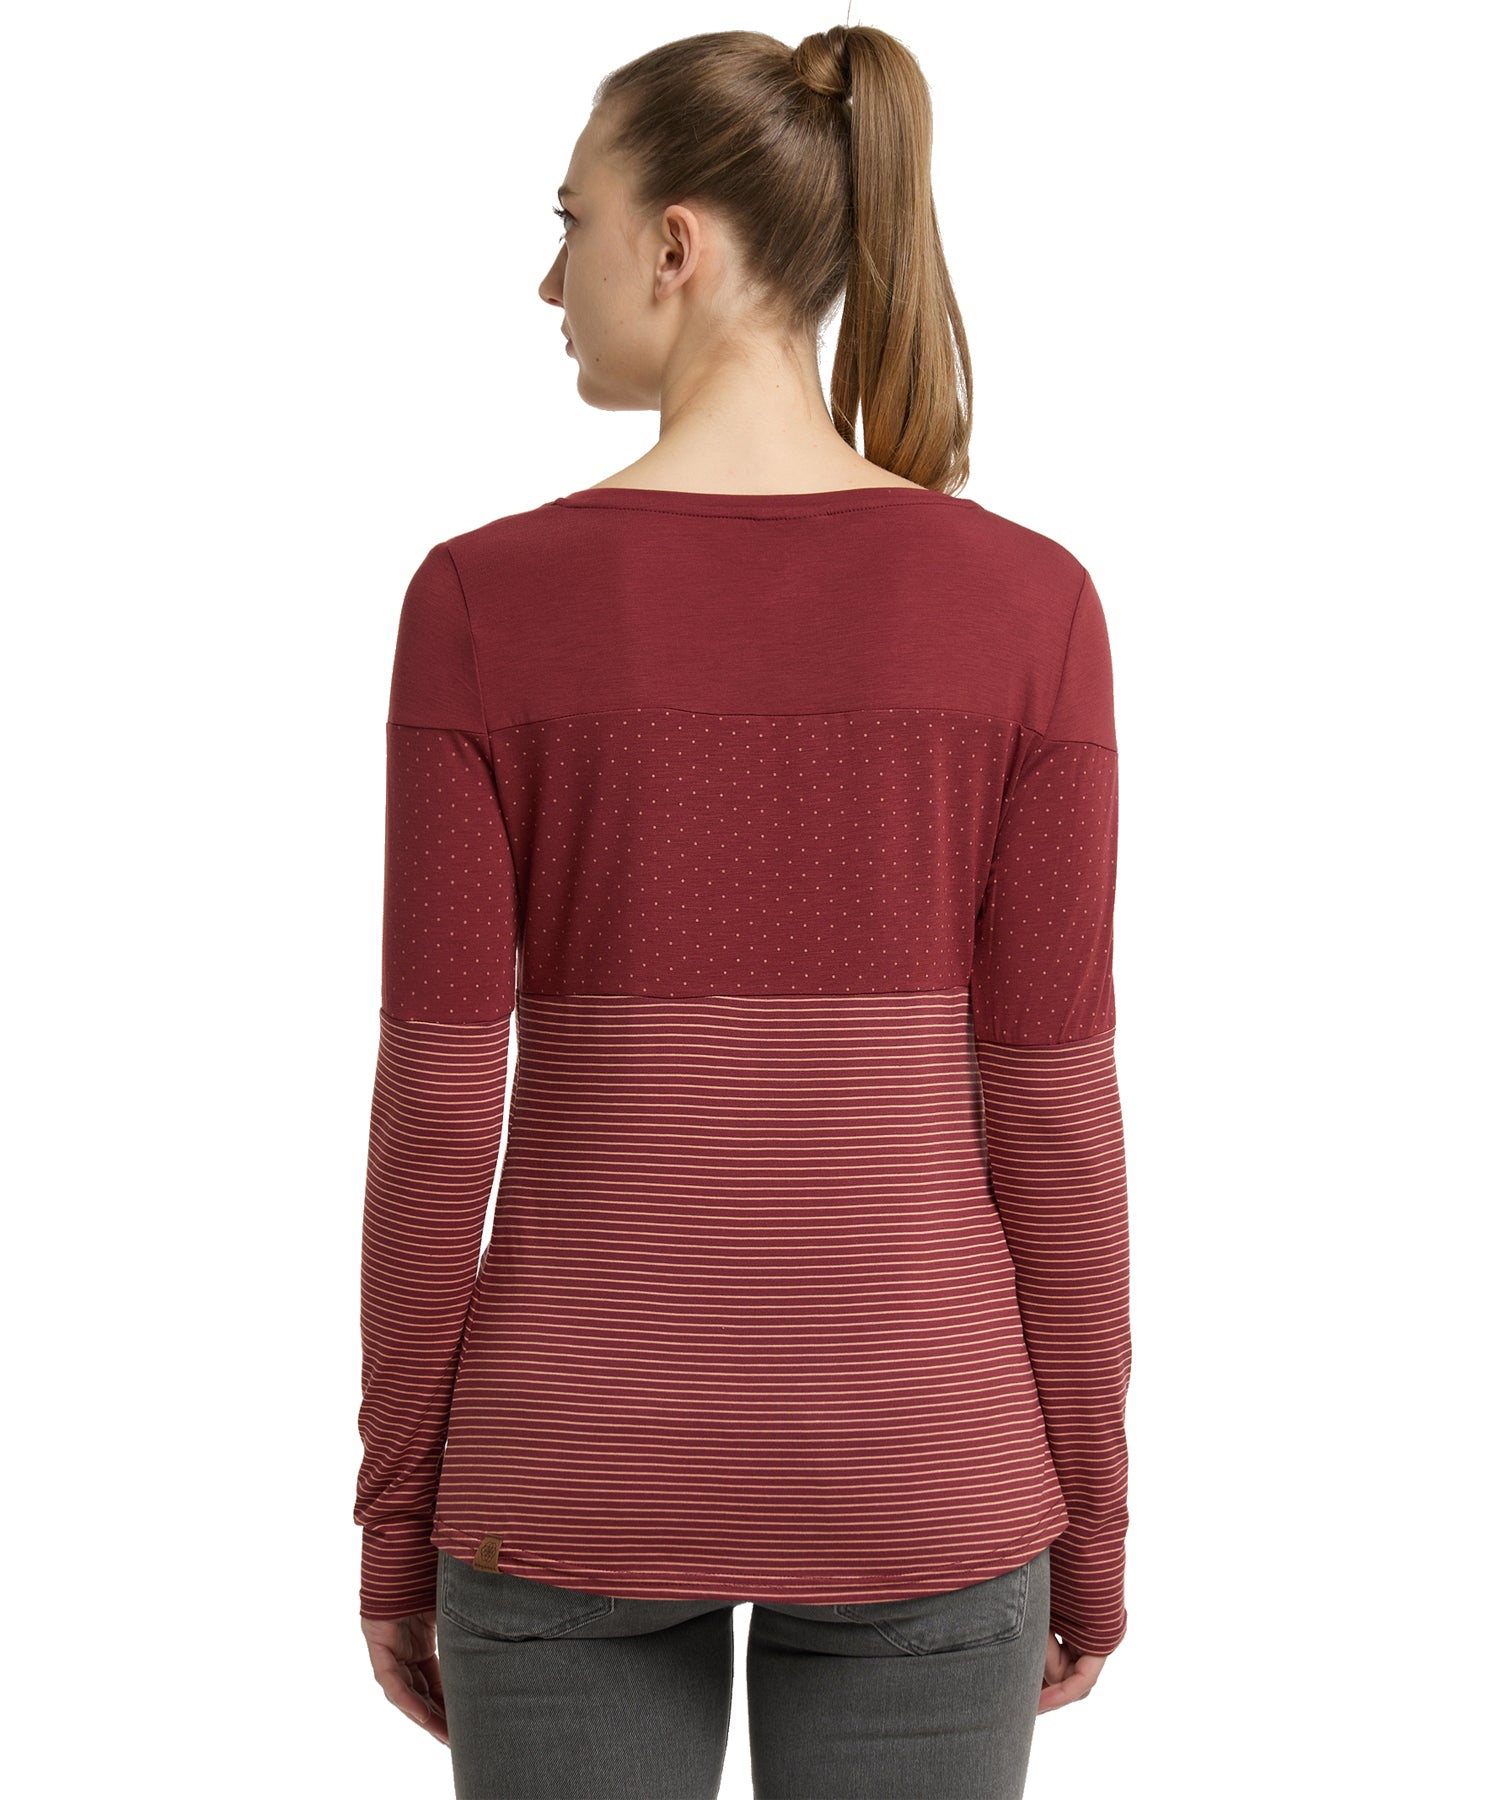 jersey-vegano-mujer-ragwear-faviola-color-rojo-a-rayas-blancas-manga-larga-manga-larga-cuello-redondo-y-ancho.